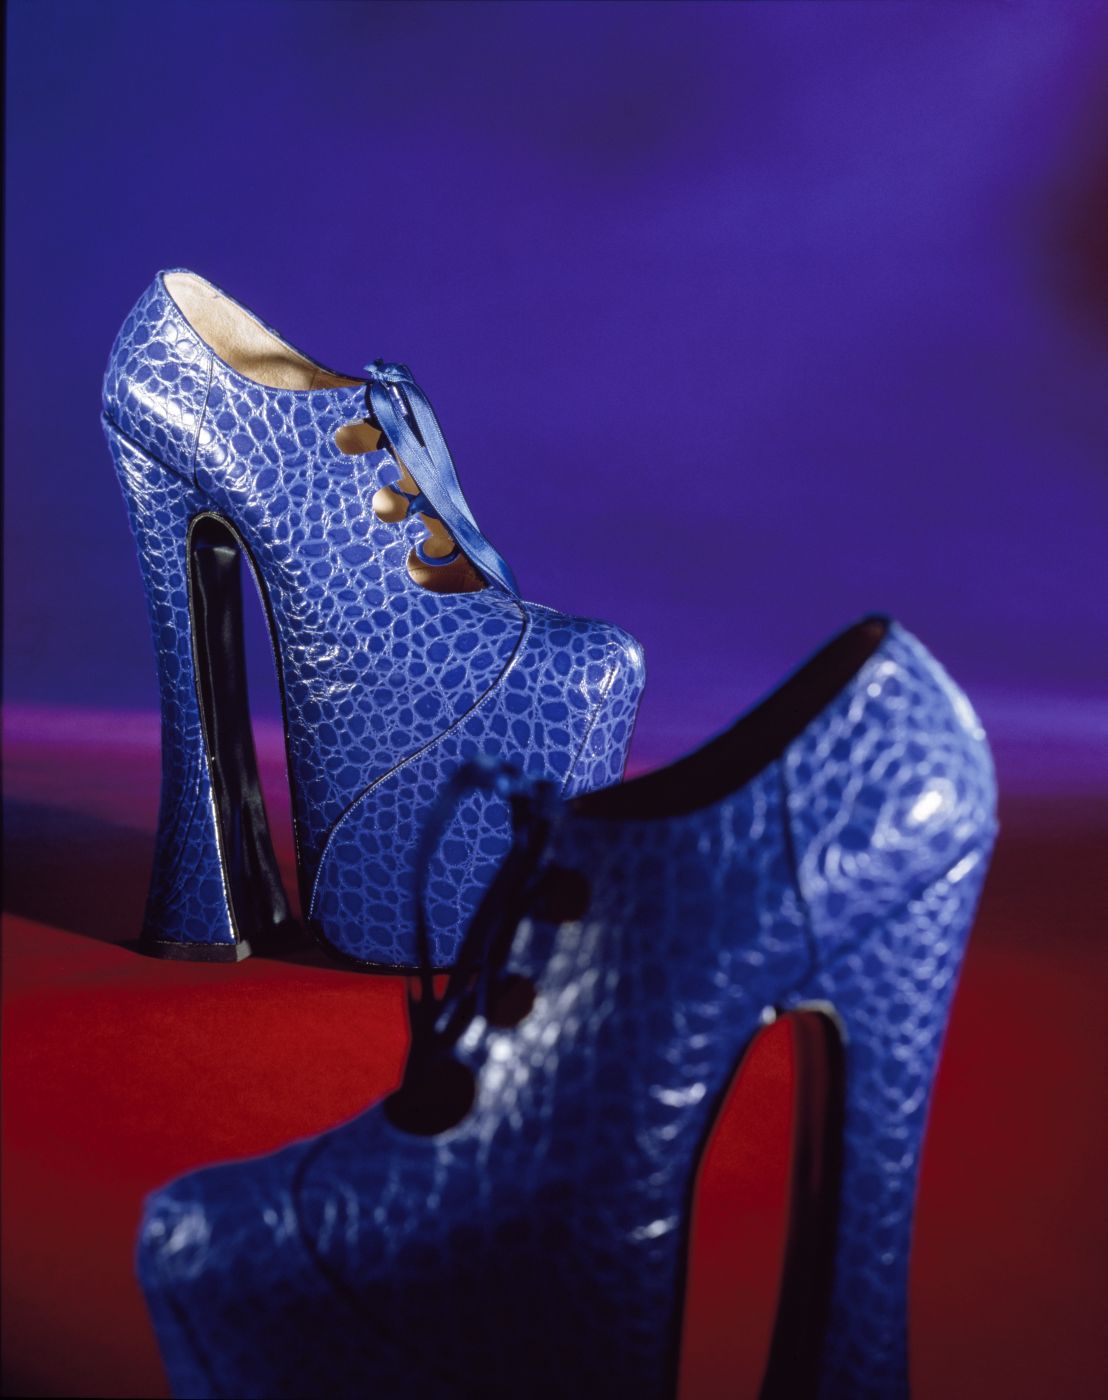 bright blue heels uk